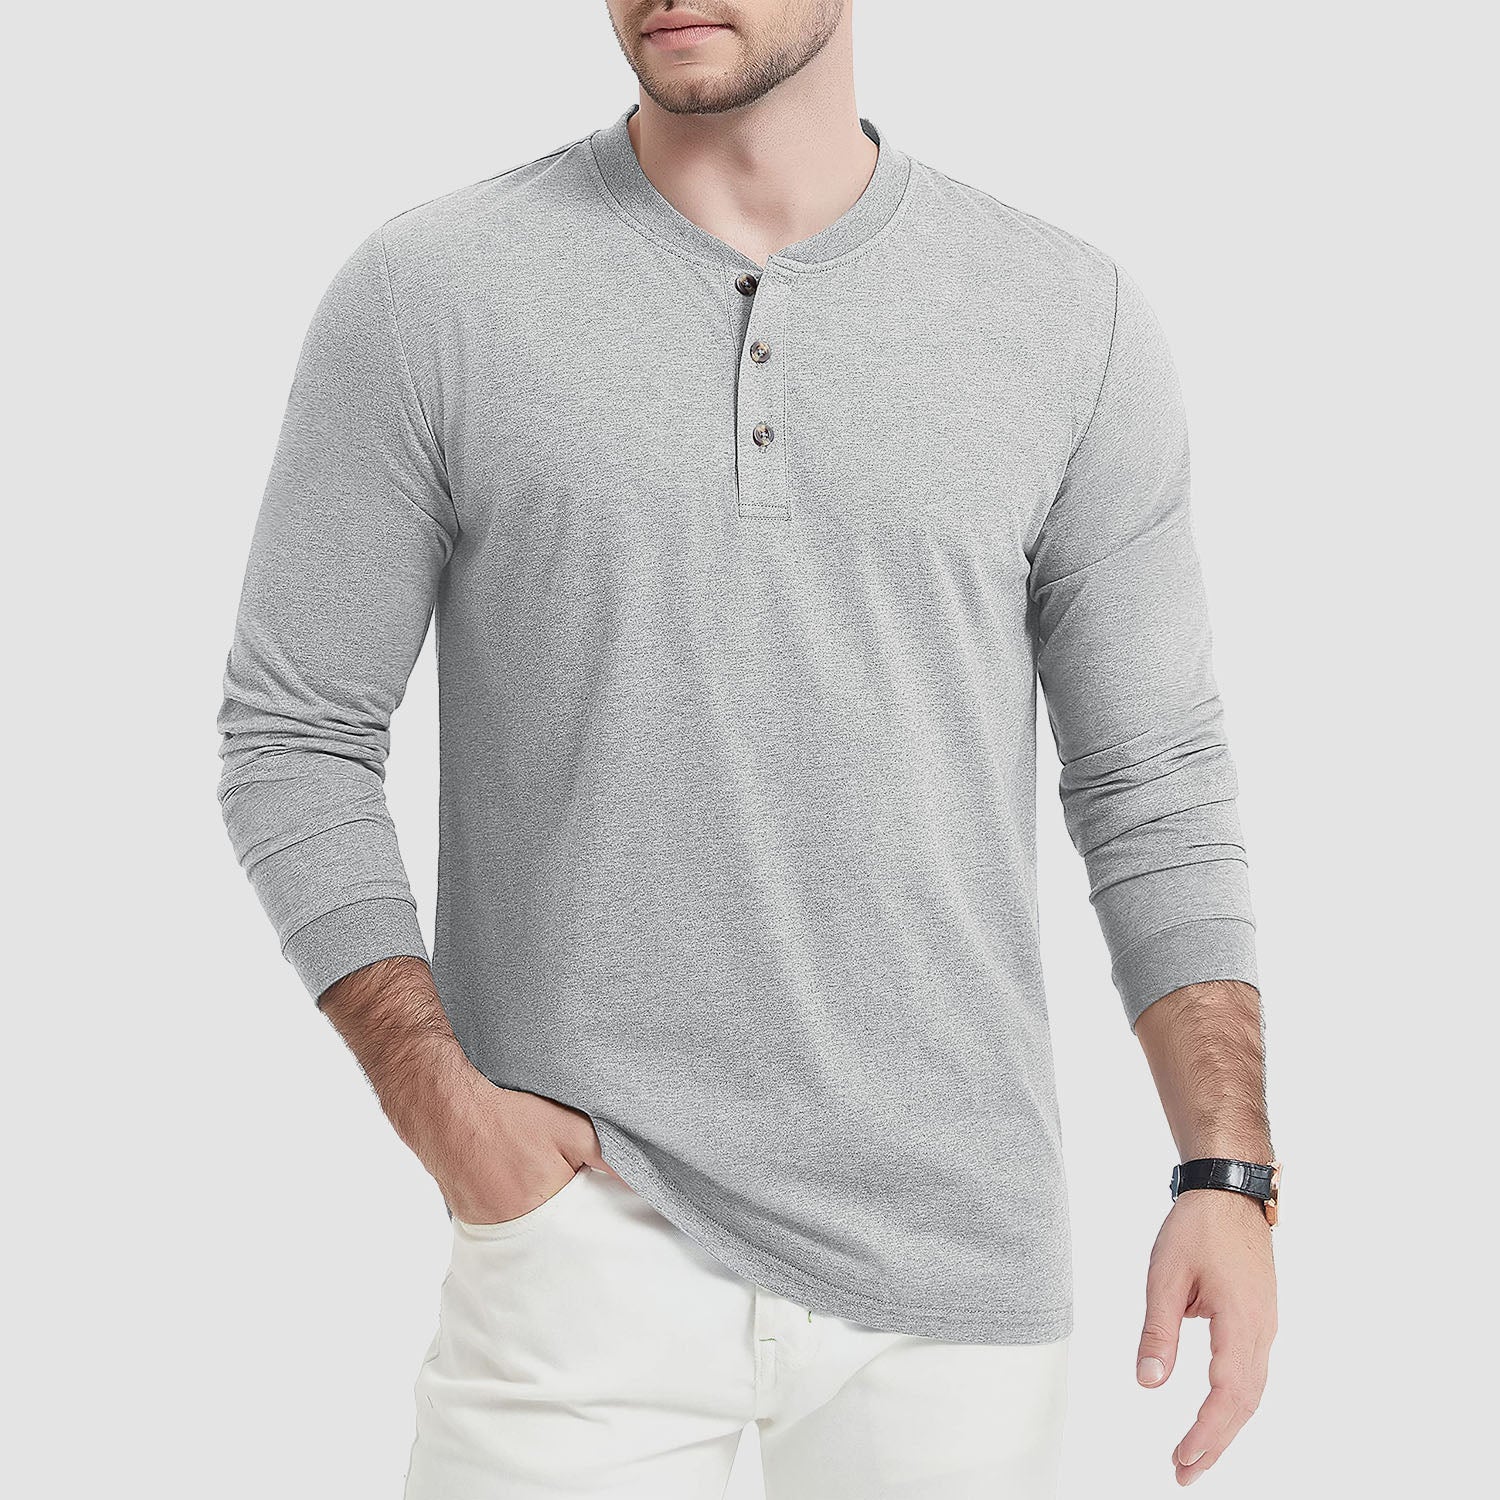 Mens Henley Shirts Long Sleeve Cotton Casual T-Shirt Fashion Front Placket Work T-Shirts